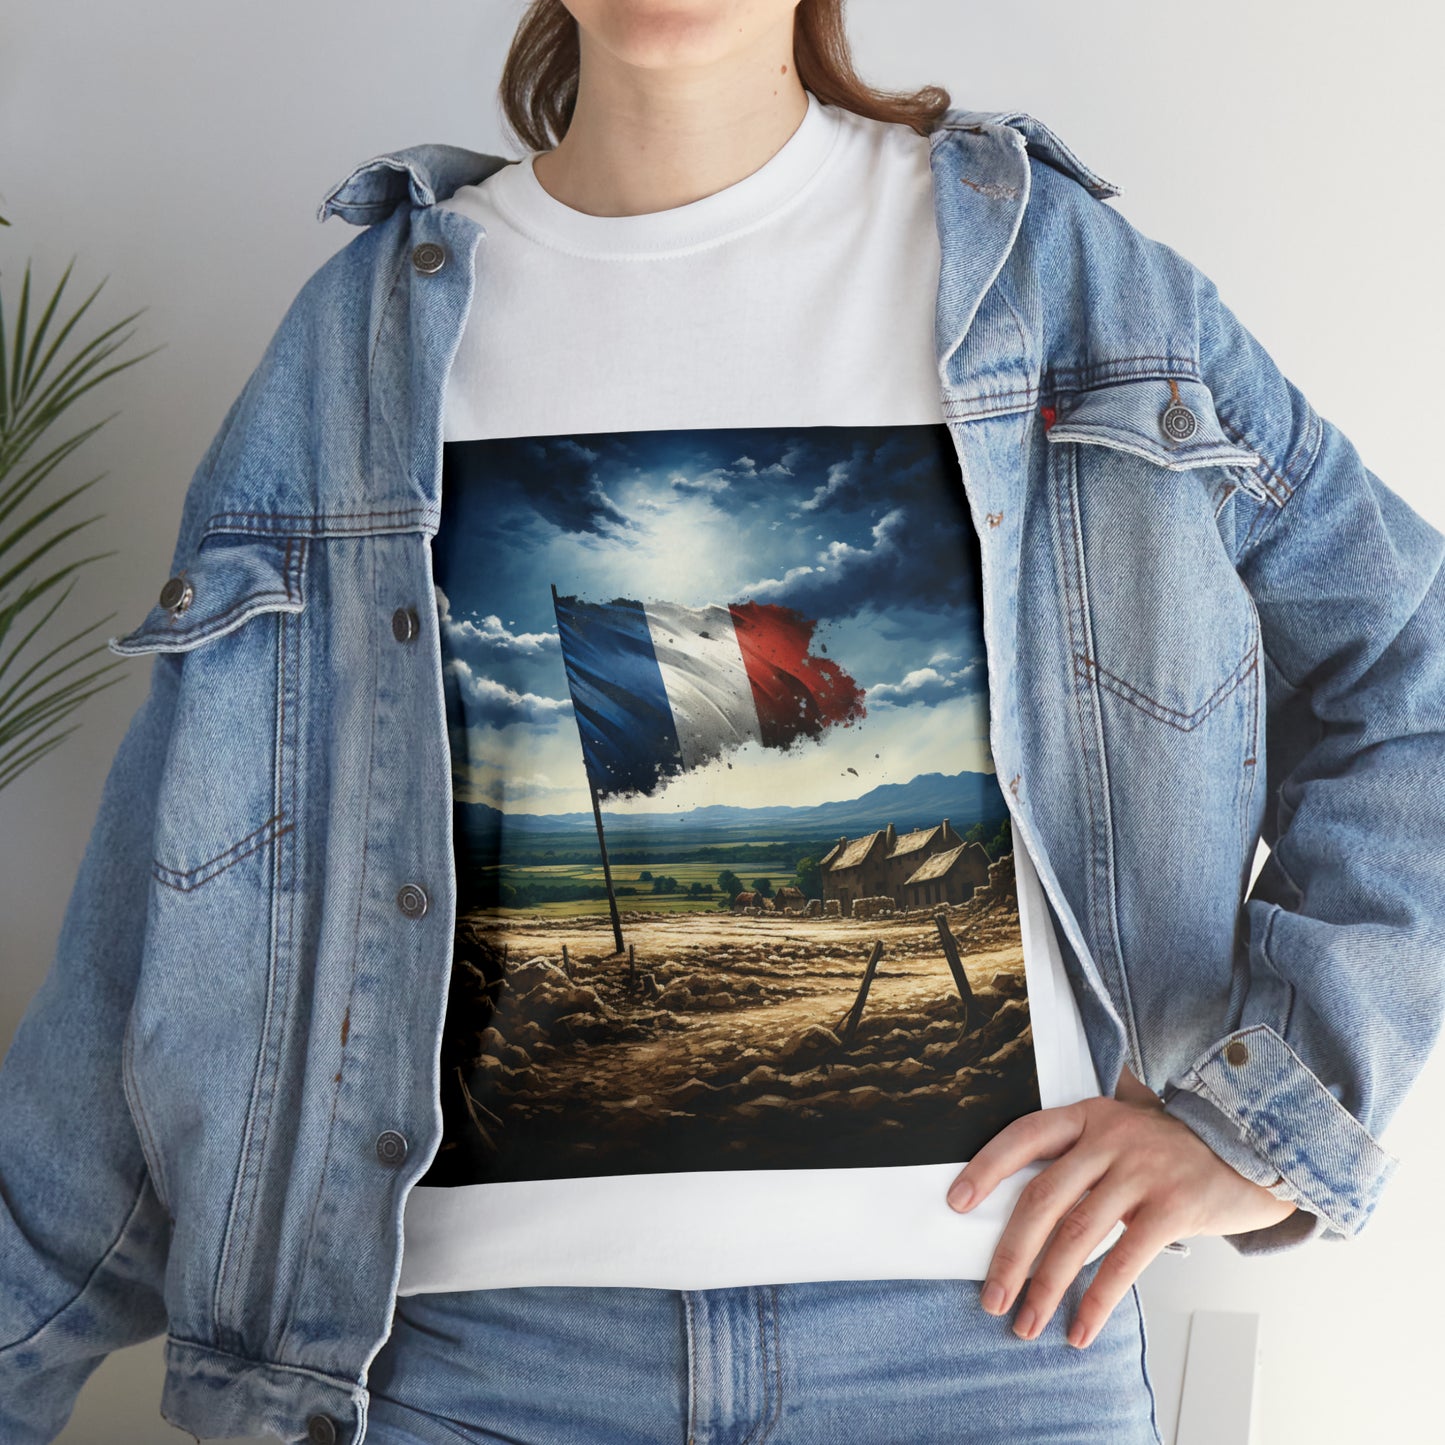 France - light shirts